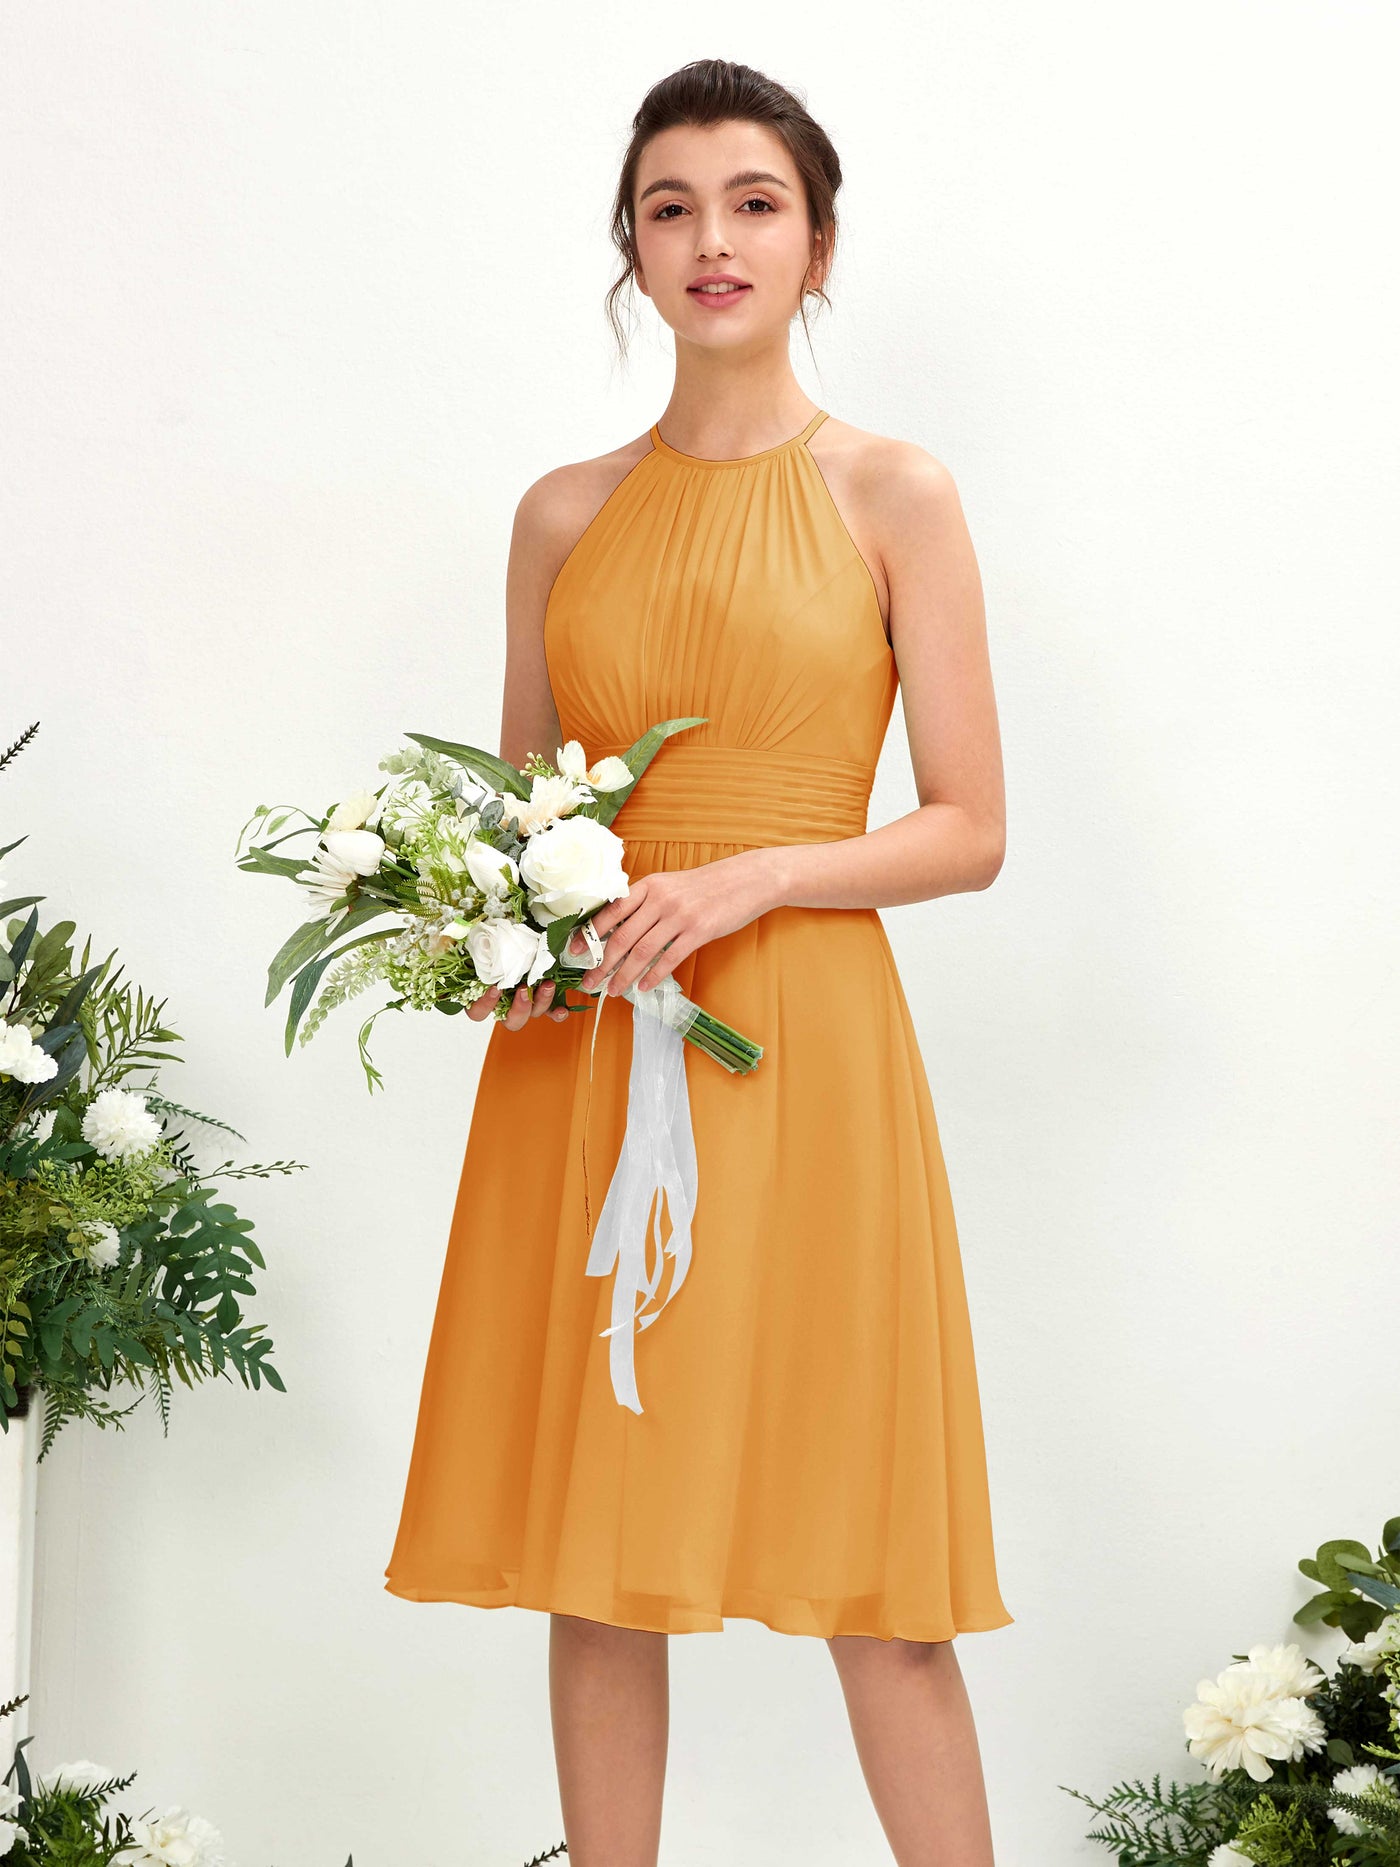 Mango Bridesmaid Dresses Bridesmaid Dress A-line Chiffon Halter Knee Length Sleeveless Wedding Party Dress (81220102)#color_mango